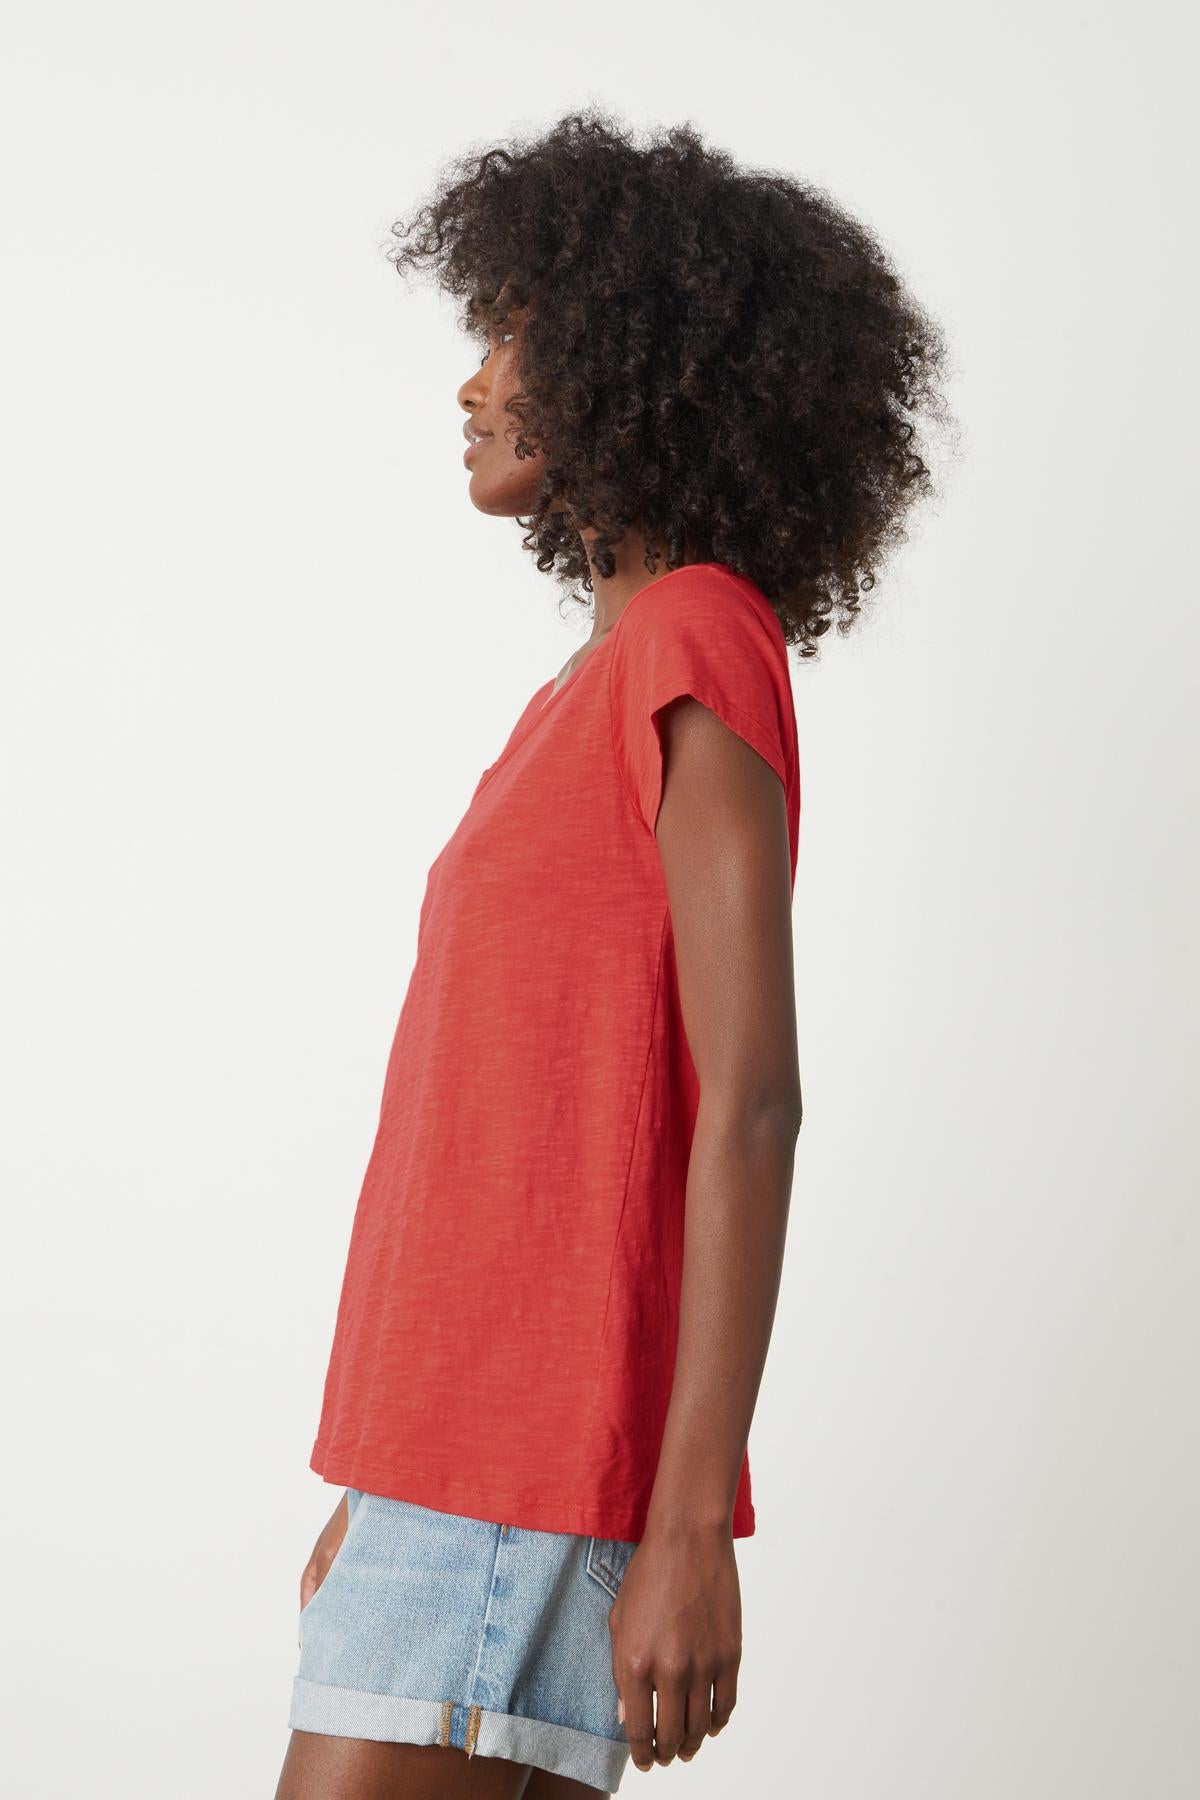 A woman wearing a Velvet by Graham & Spencer KIRA ORIGINAL SLUB SCOOP NECK TEE and shorts.-35201184399553